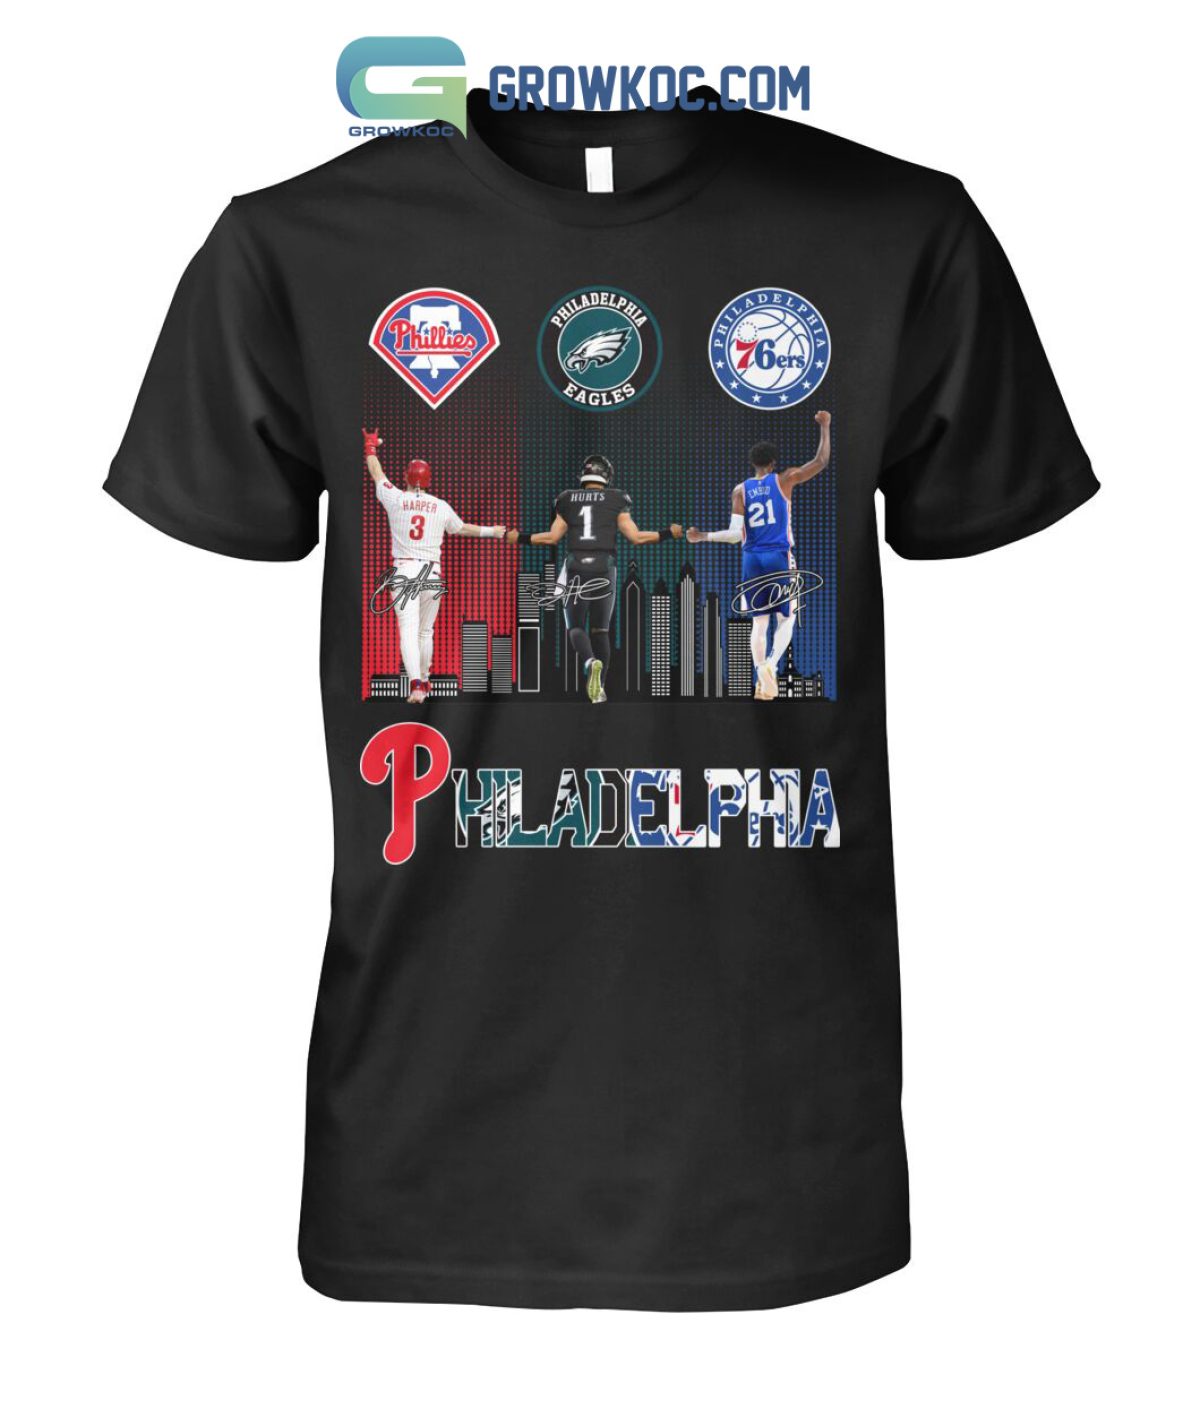 Philadelphia Phillies Eagles 76er T-Shirt - Growkoc